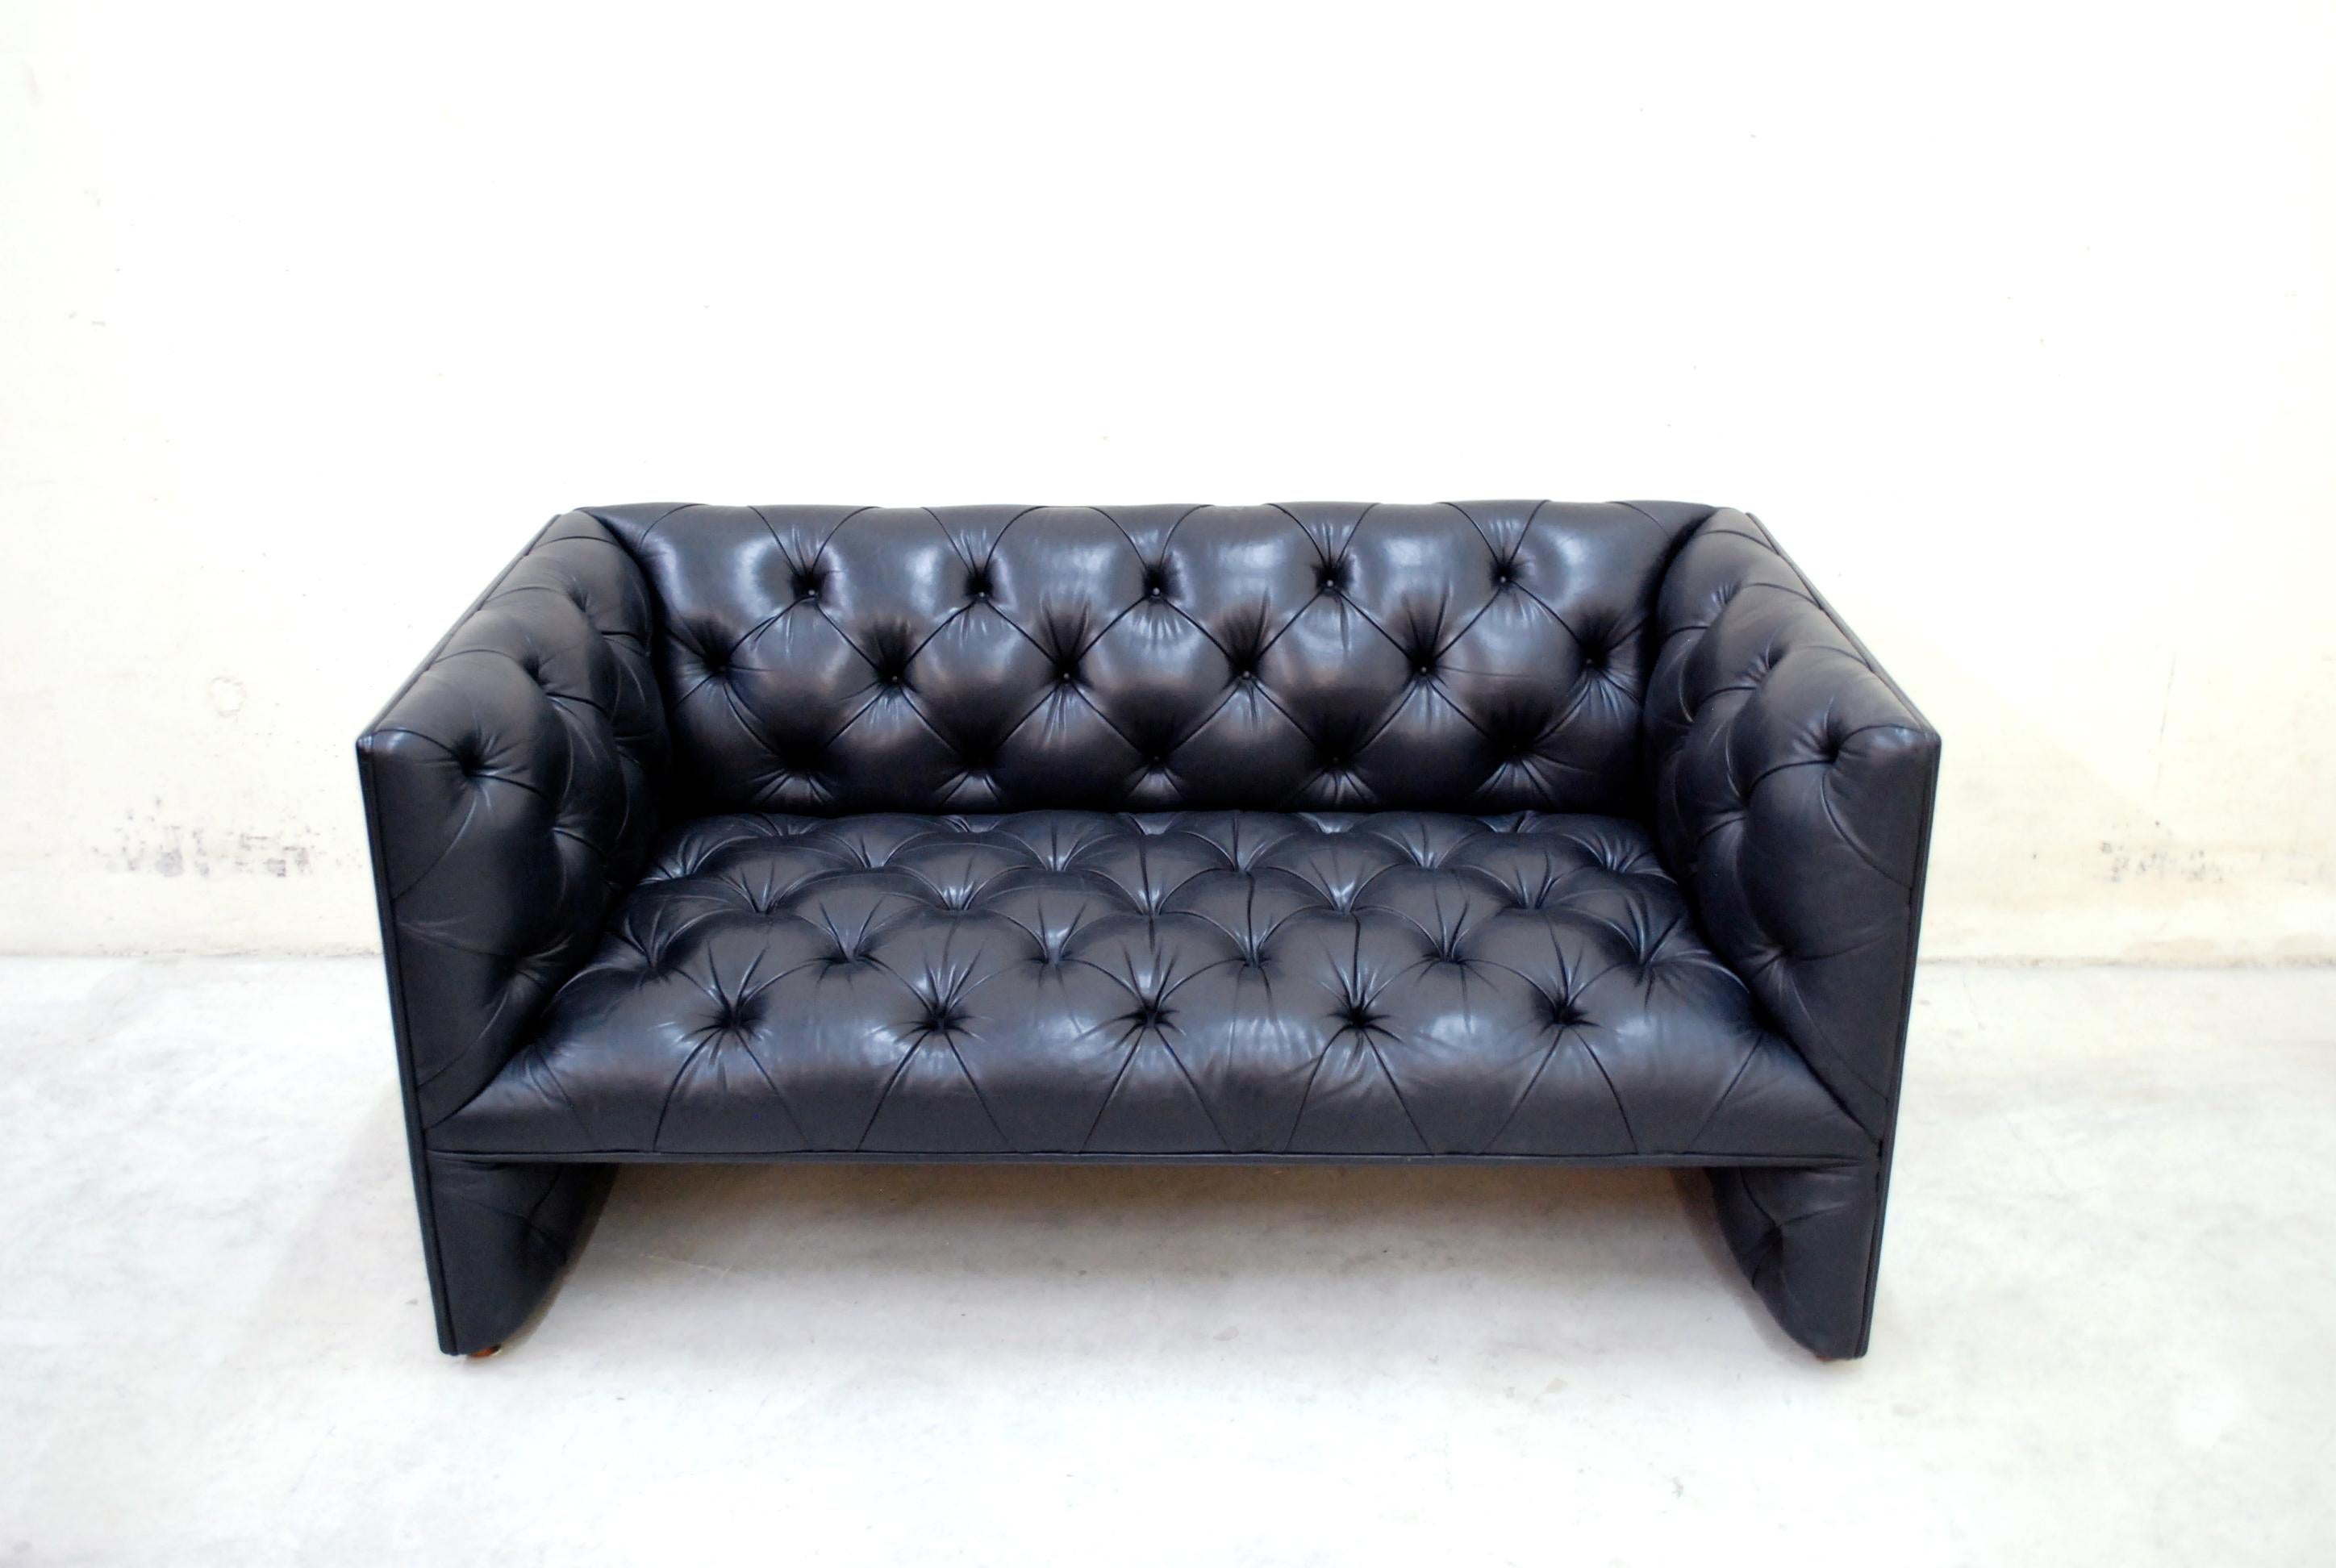 Wittmann Black Leather Sofa Model Edwards Design by Eward B. Tuttle For Sale 2